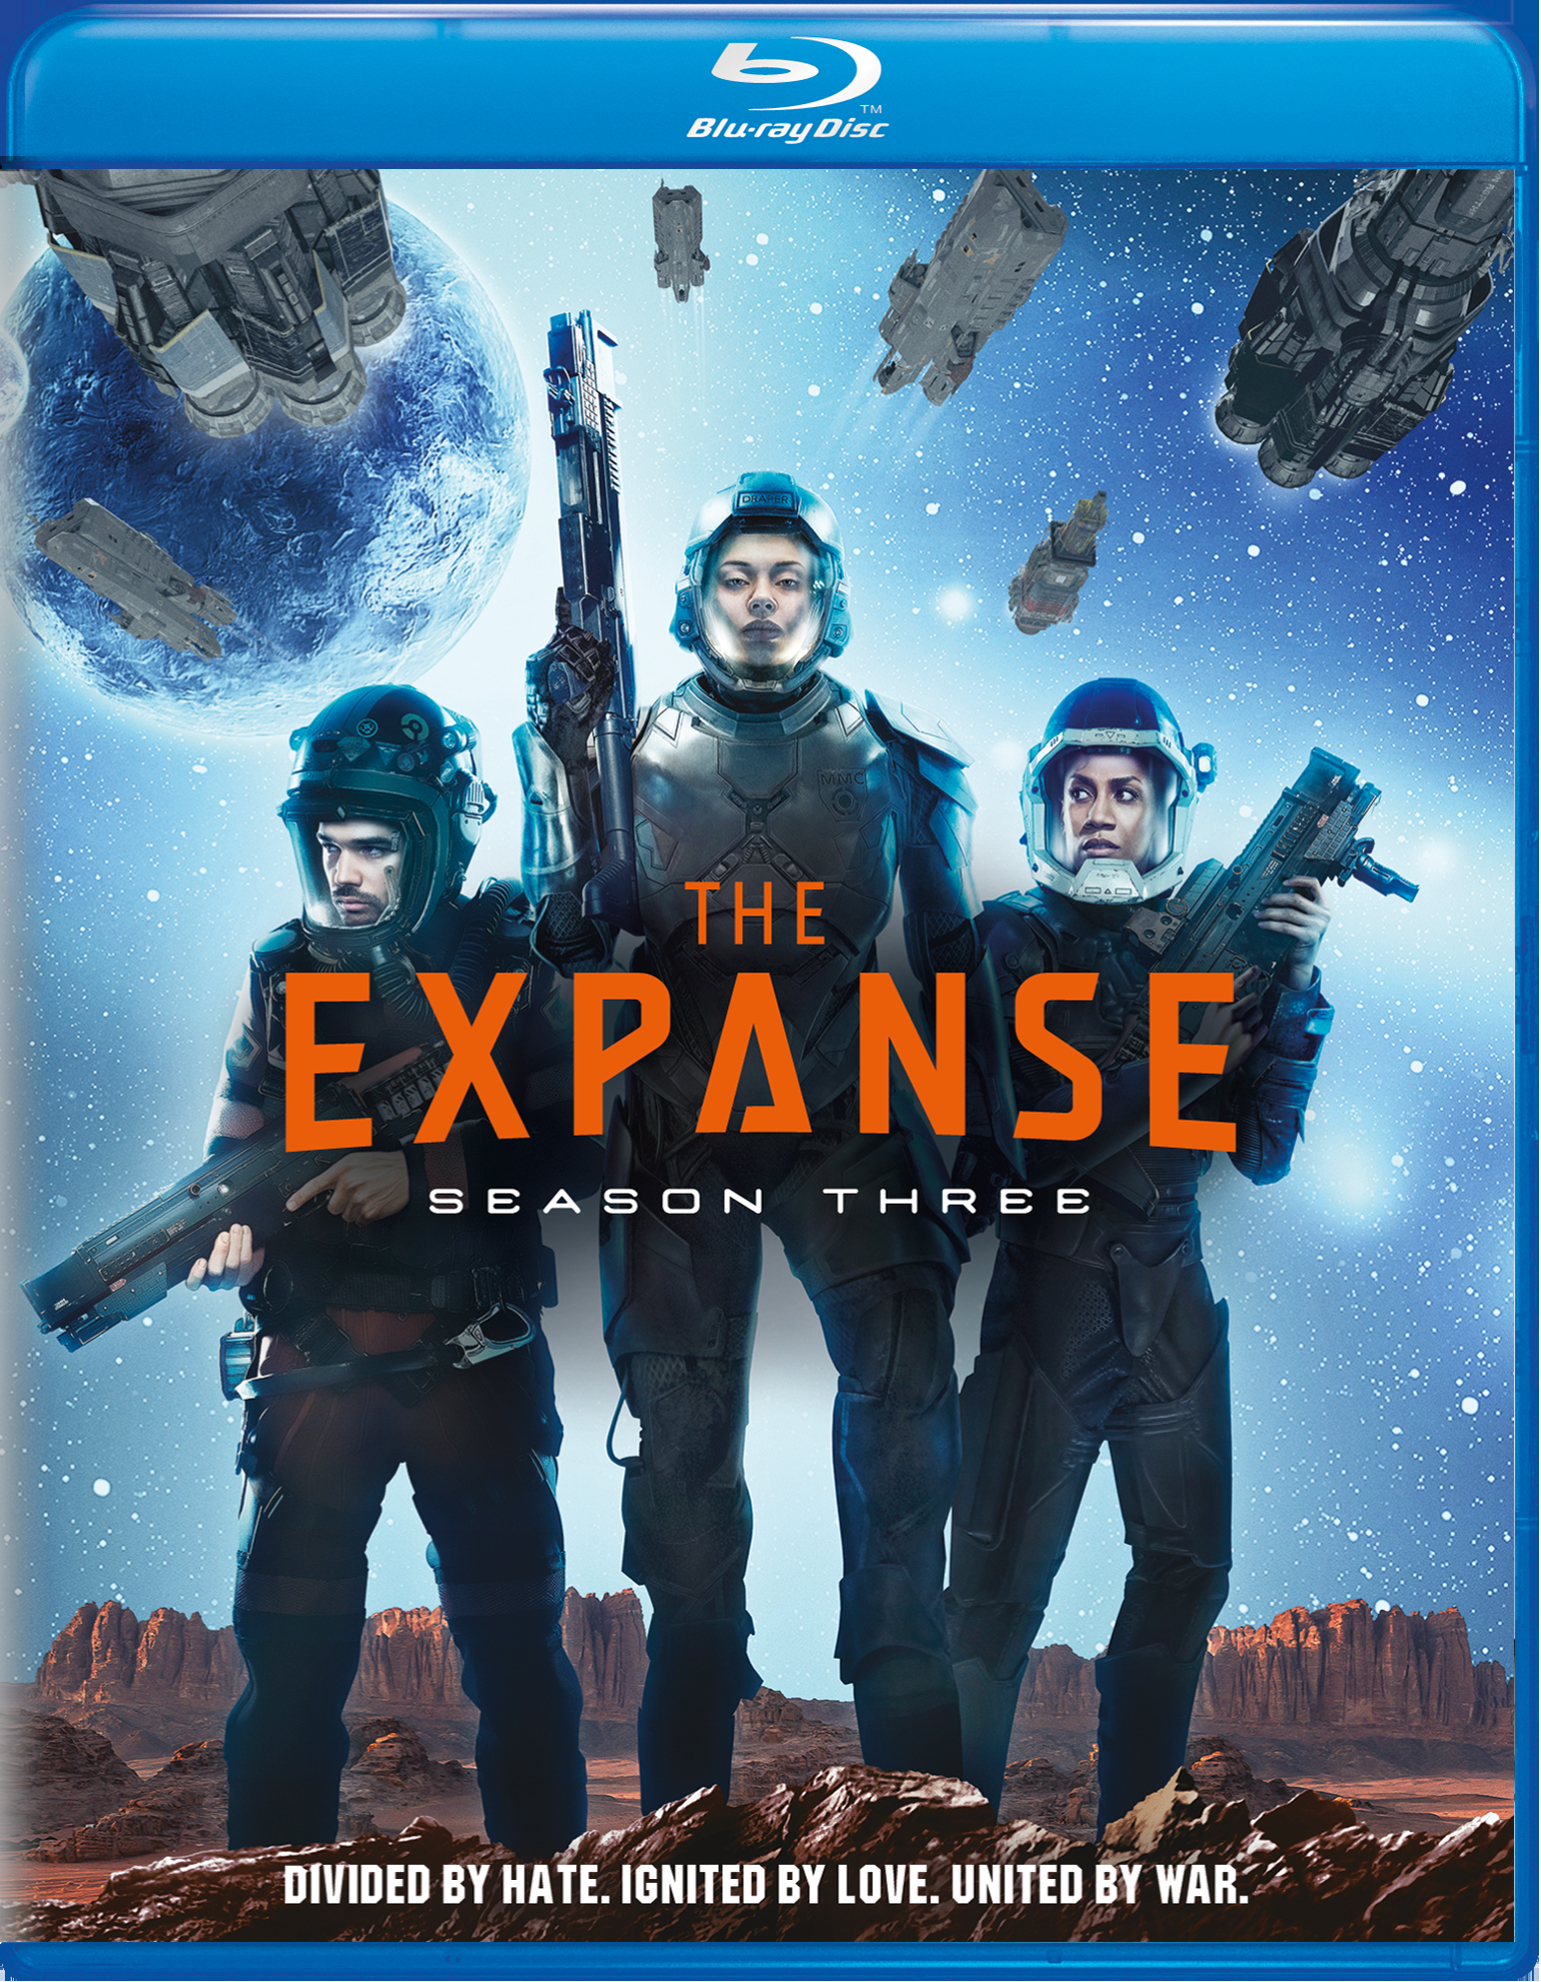 The Expanse: Season Three (Blu-ray + Digital HD) - Blu-ray [ 2018 ]  - Sci Fi Television On Blu-ray - TV Shows On GRUV